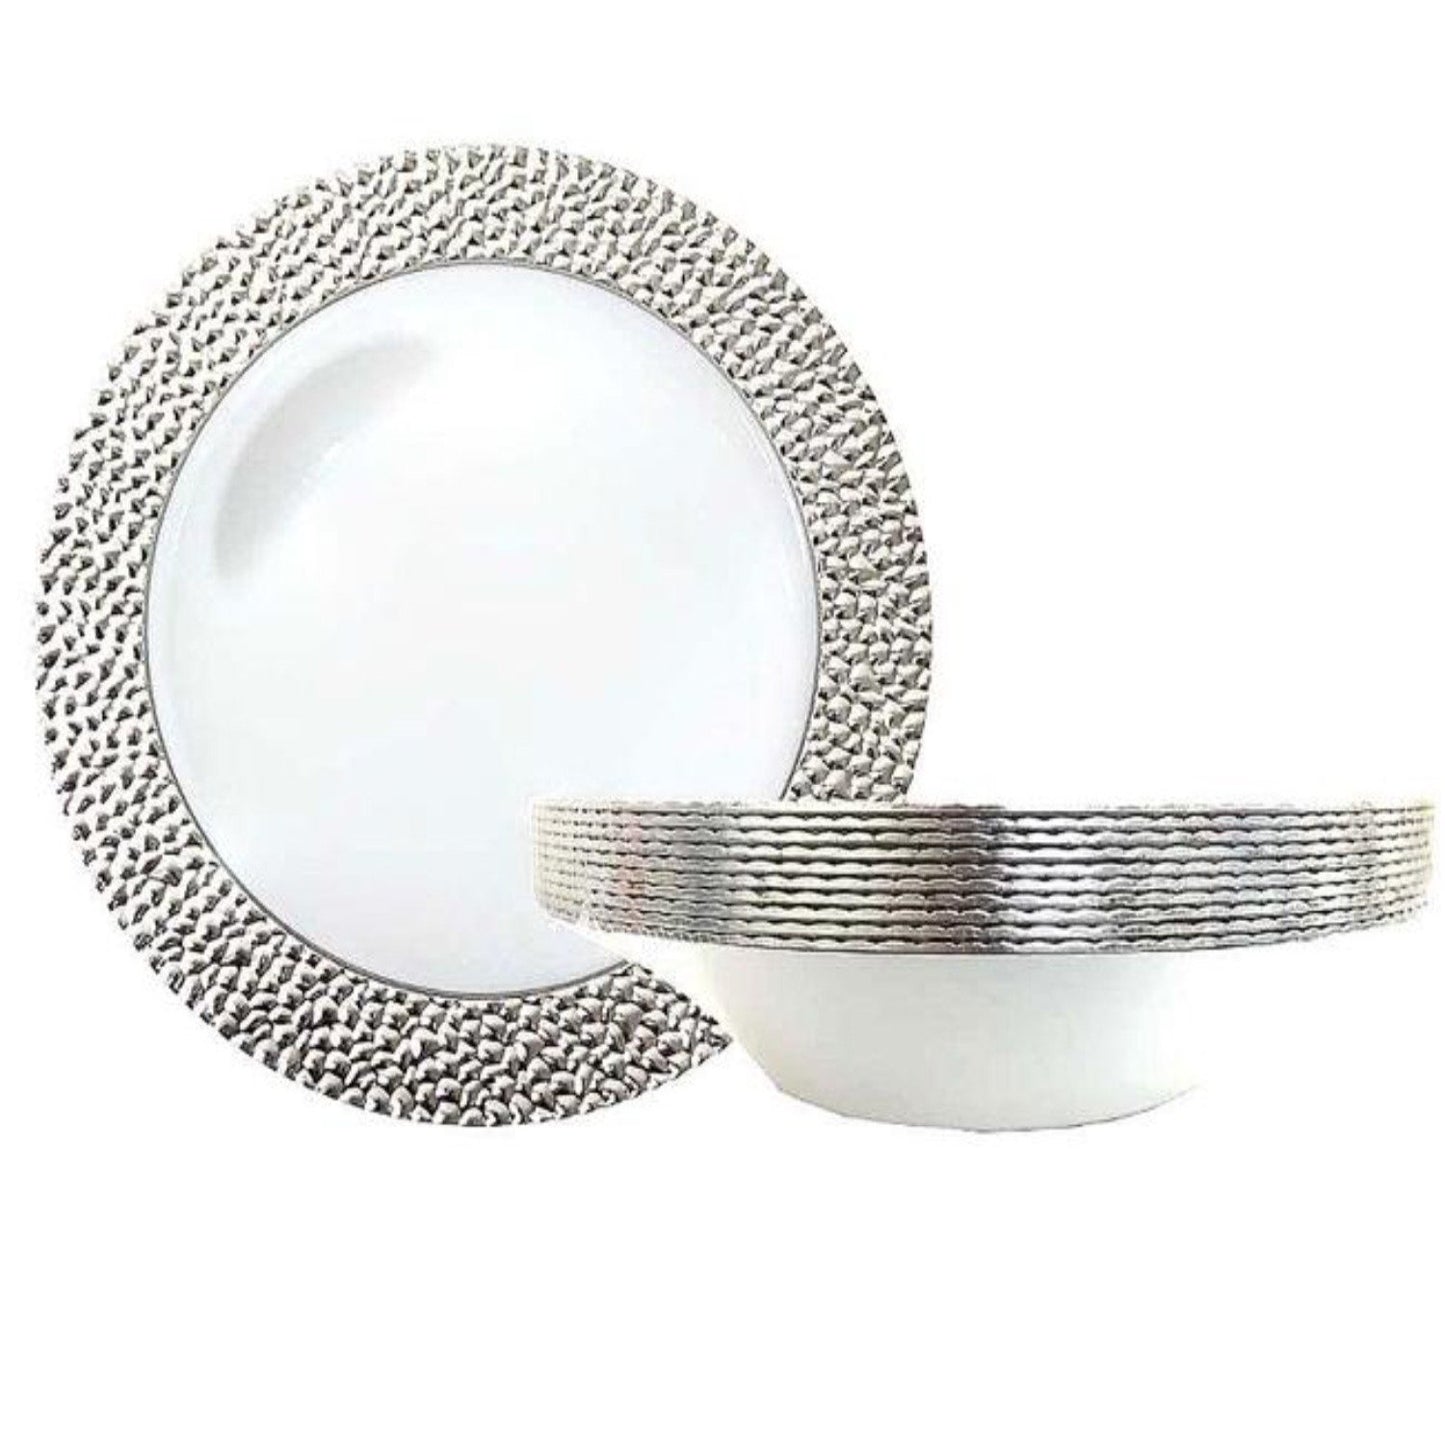 Hammered Collection Soup Bowls White Silver 12 oz Bowls Decorline   